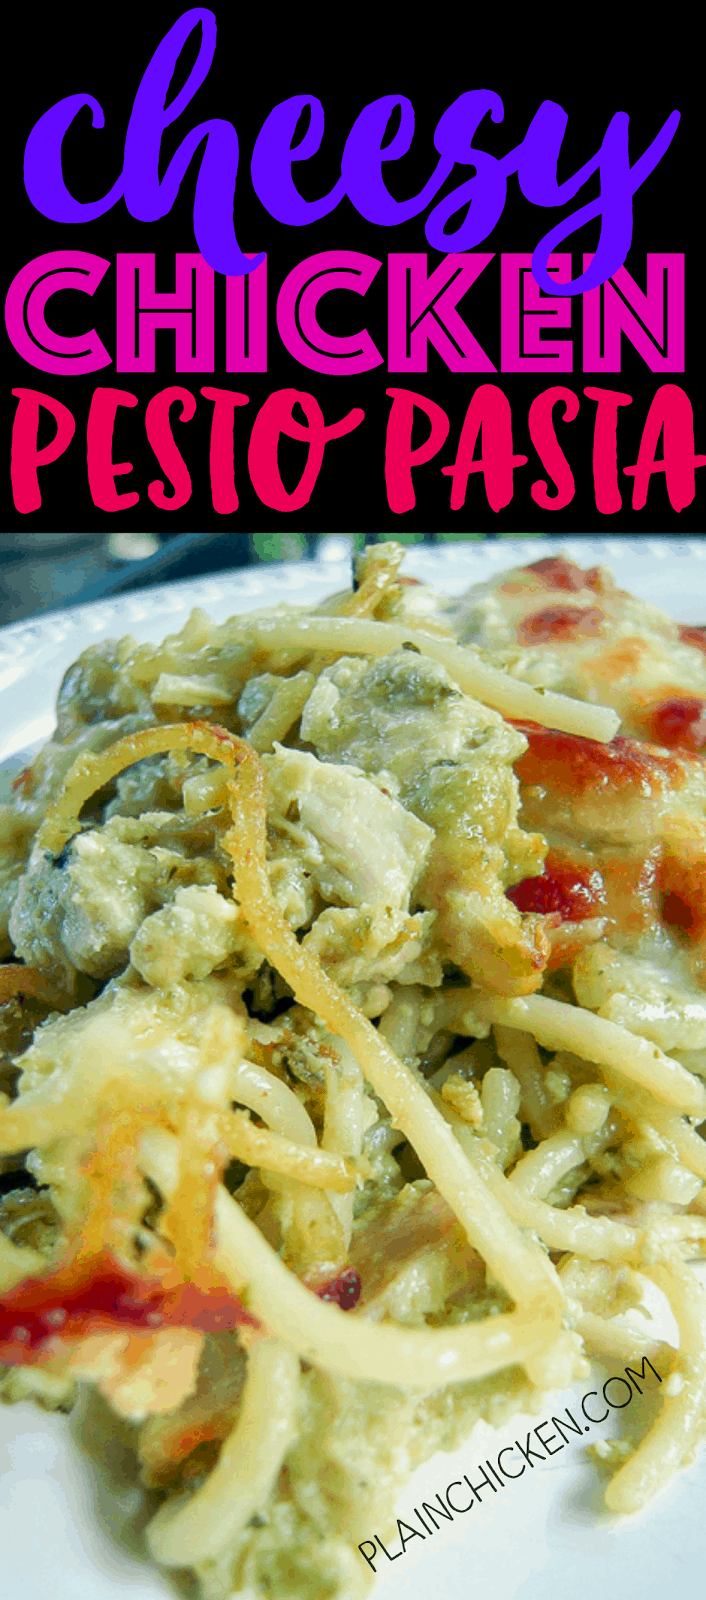 Cheesy Chicken Pesto Pasta - only 6 ingredients! Chicken, spaghetti, pesto, ricotta, mozzarella and parmesan - SO good! Great make ahead pasta casserole recipe - can freeze too!